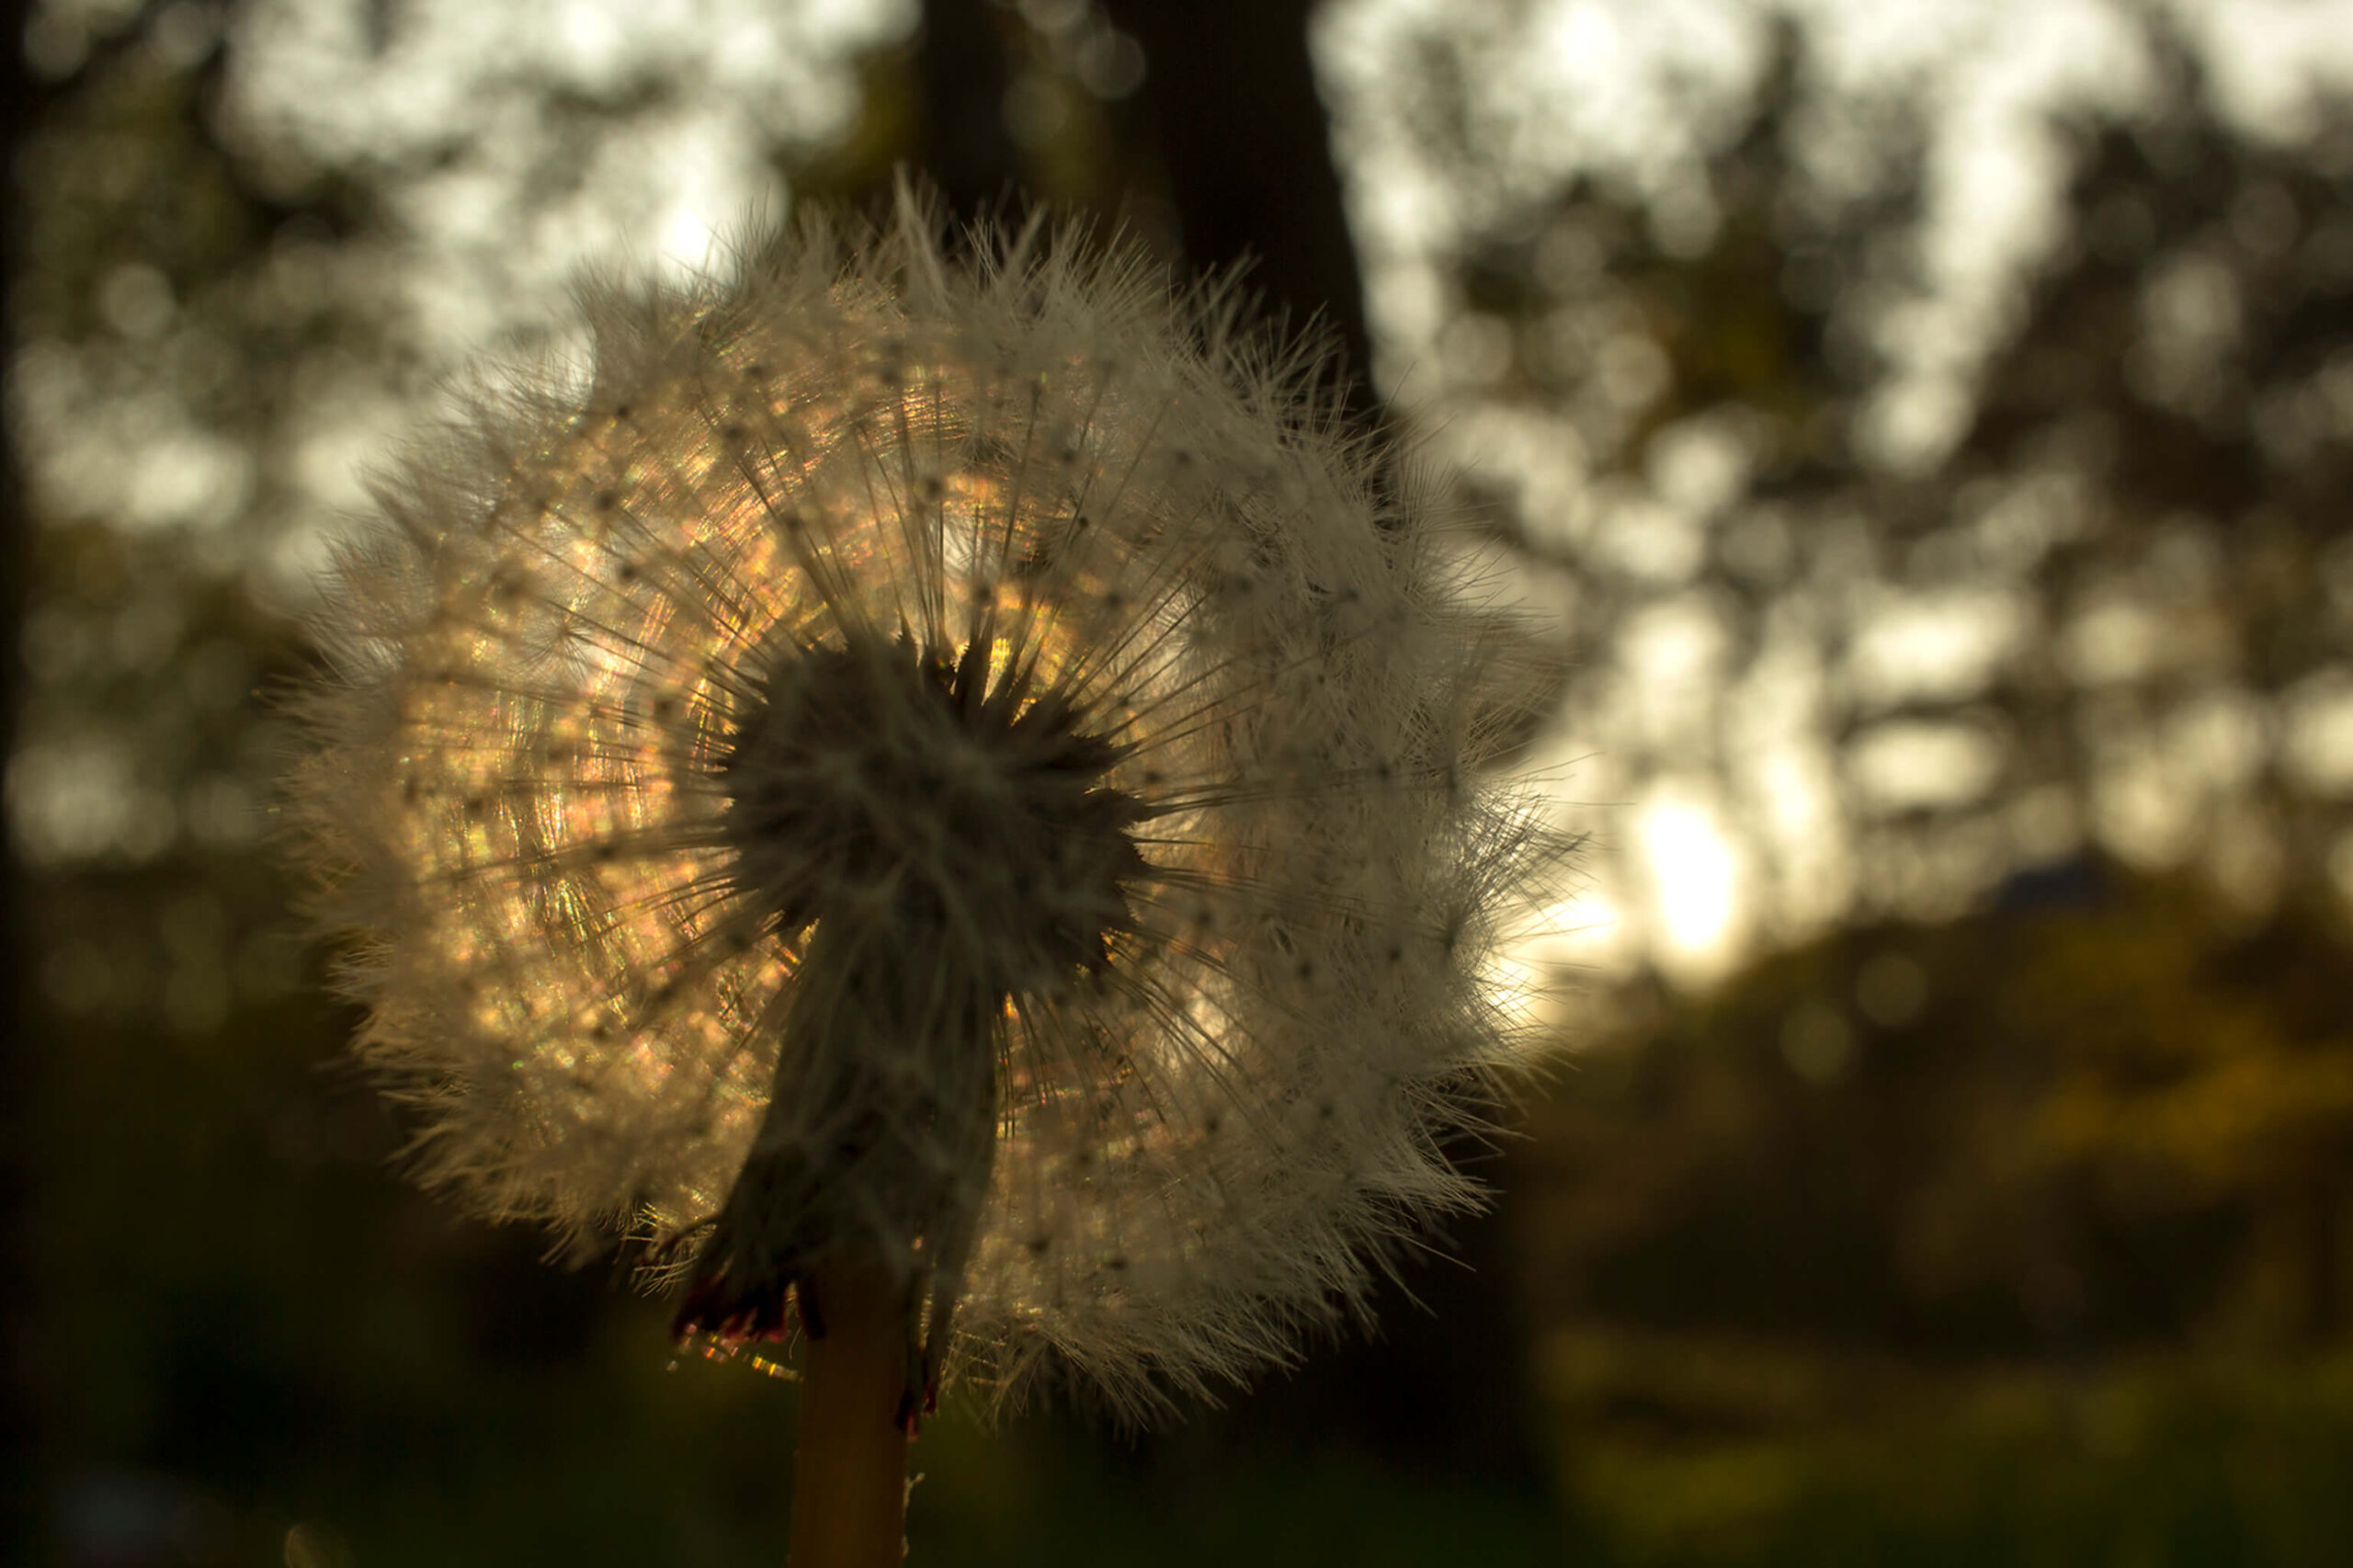 03-Sun shines through the dandelion_Kevin-Mateman_natuur